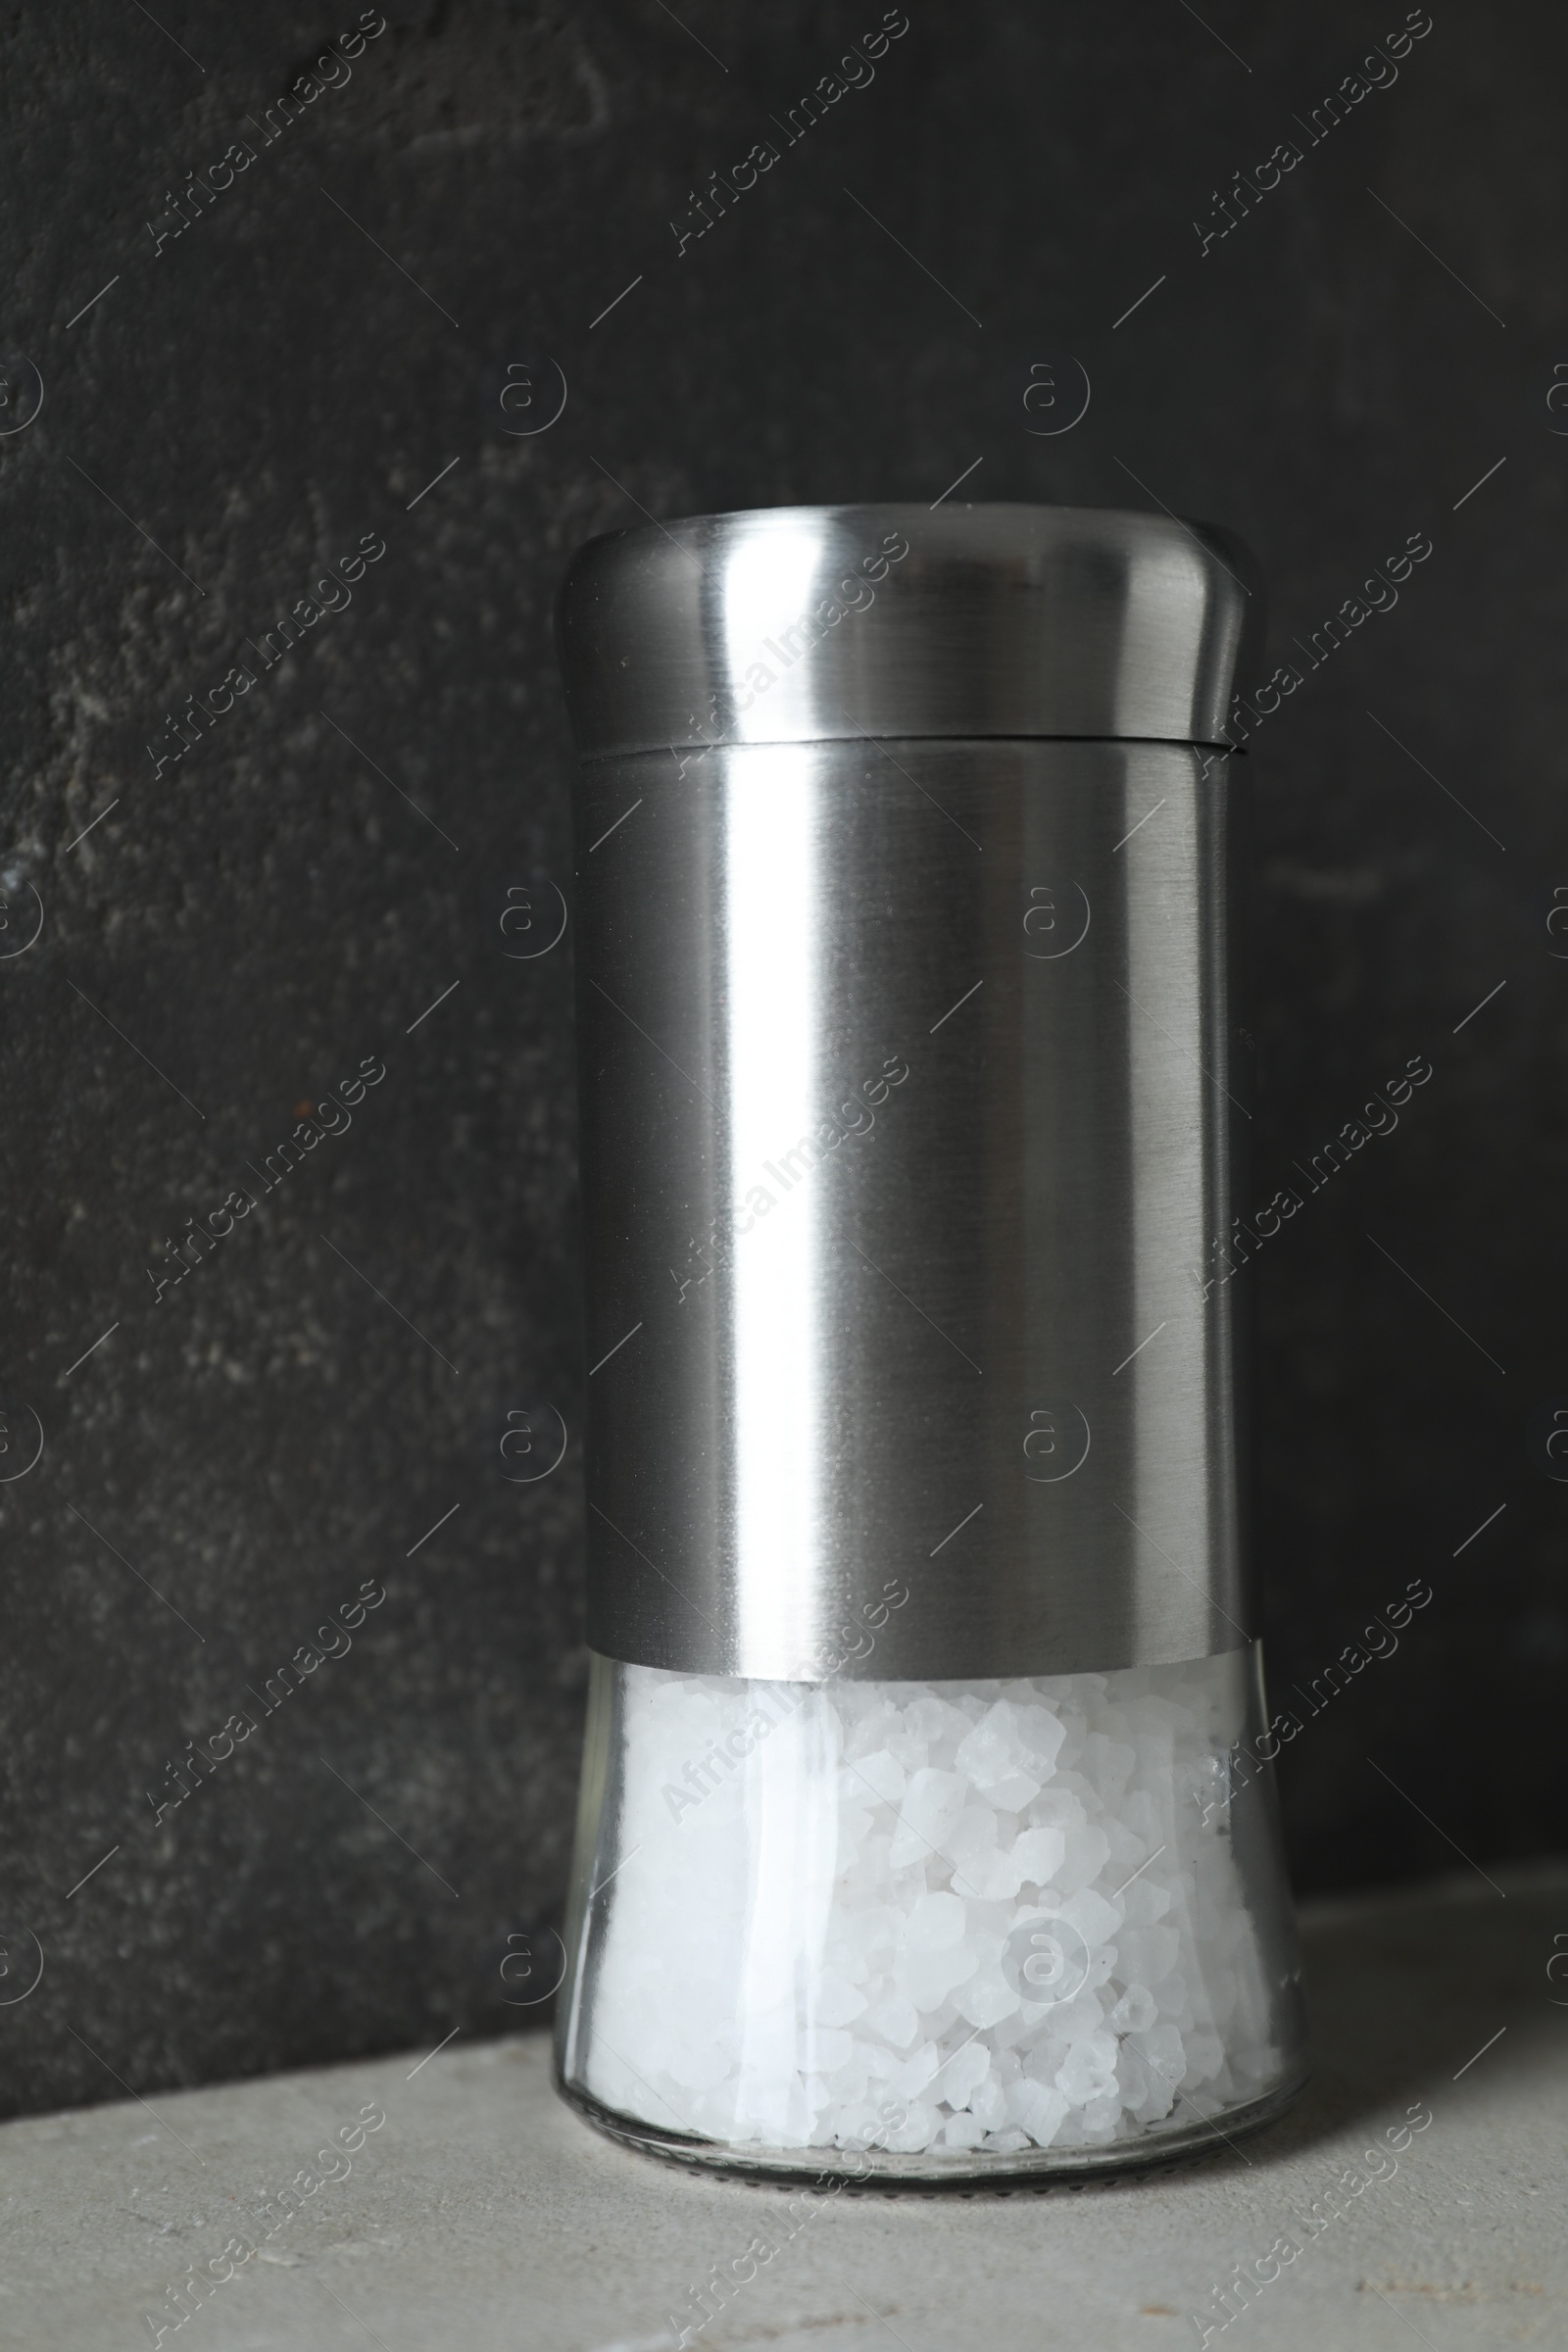 Photo of Salt shaker on light table against grey background, closeup